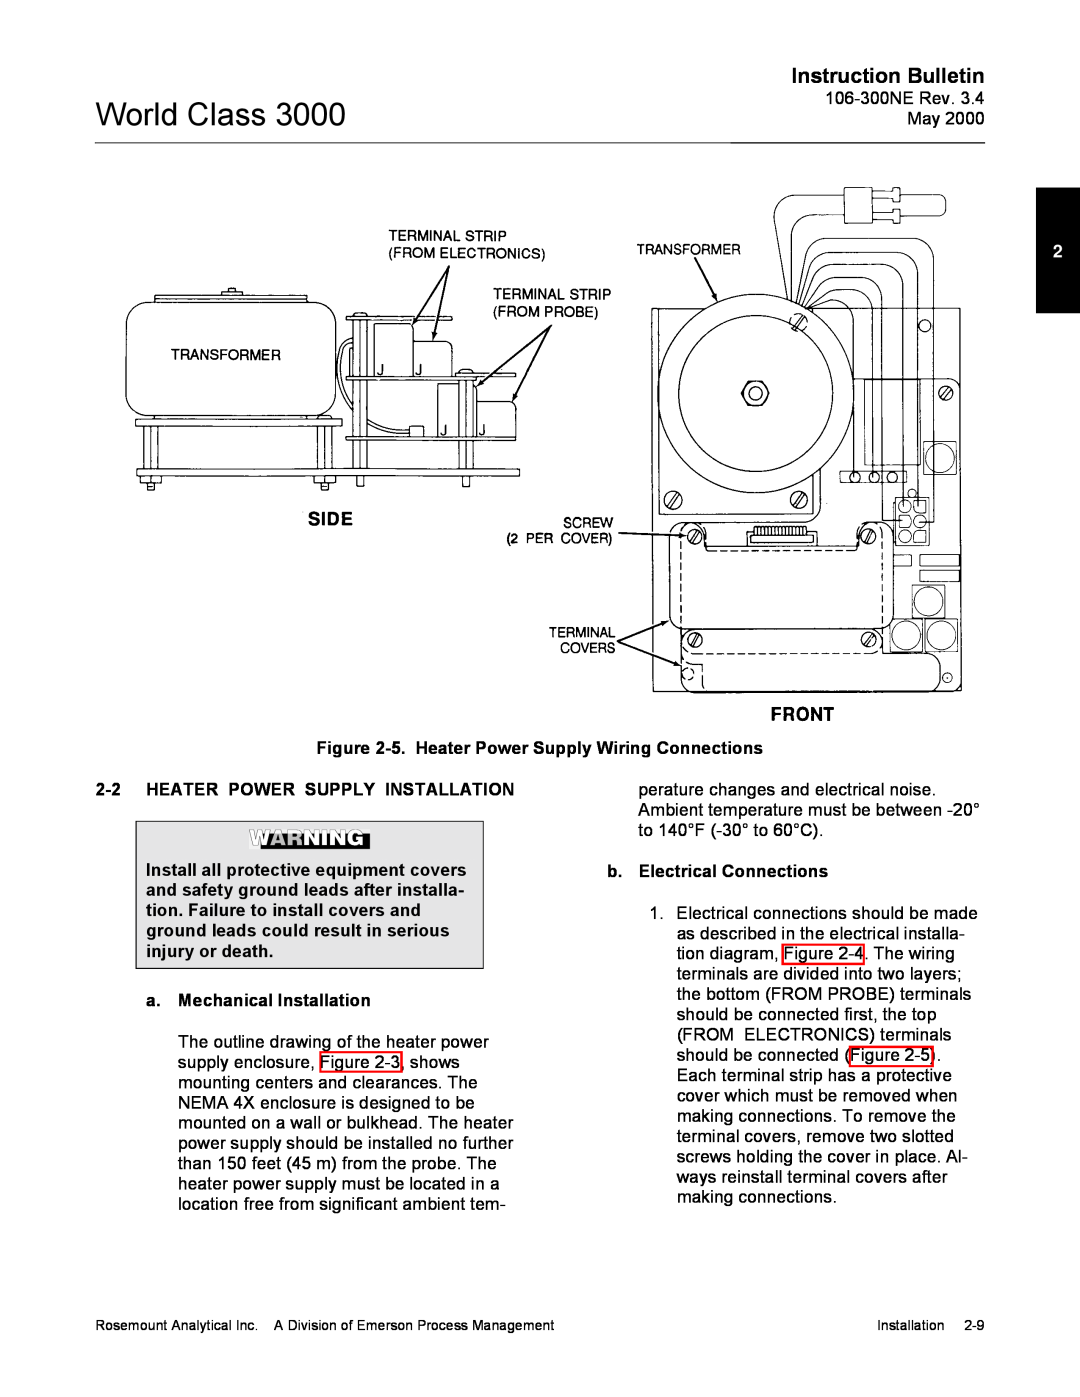 Emerson 3000 manual Instruction Bulletin, 5.Heater Power Supply Wiring Connections, 2-2HEATER POWER SUPPLY INSTALLATION 